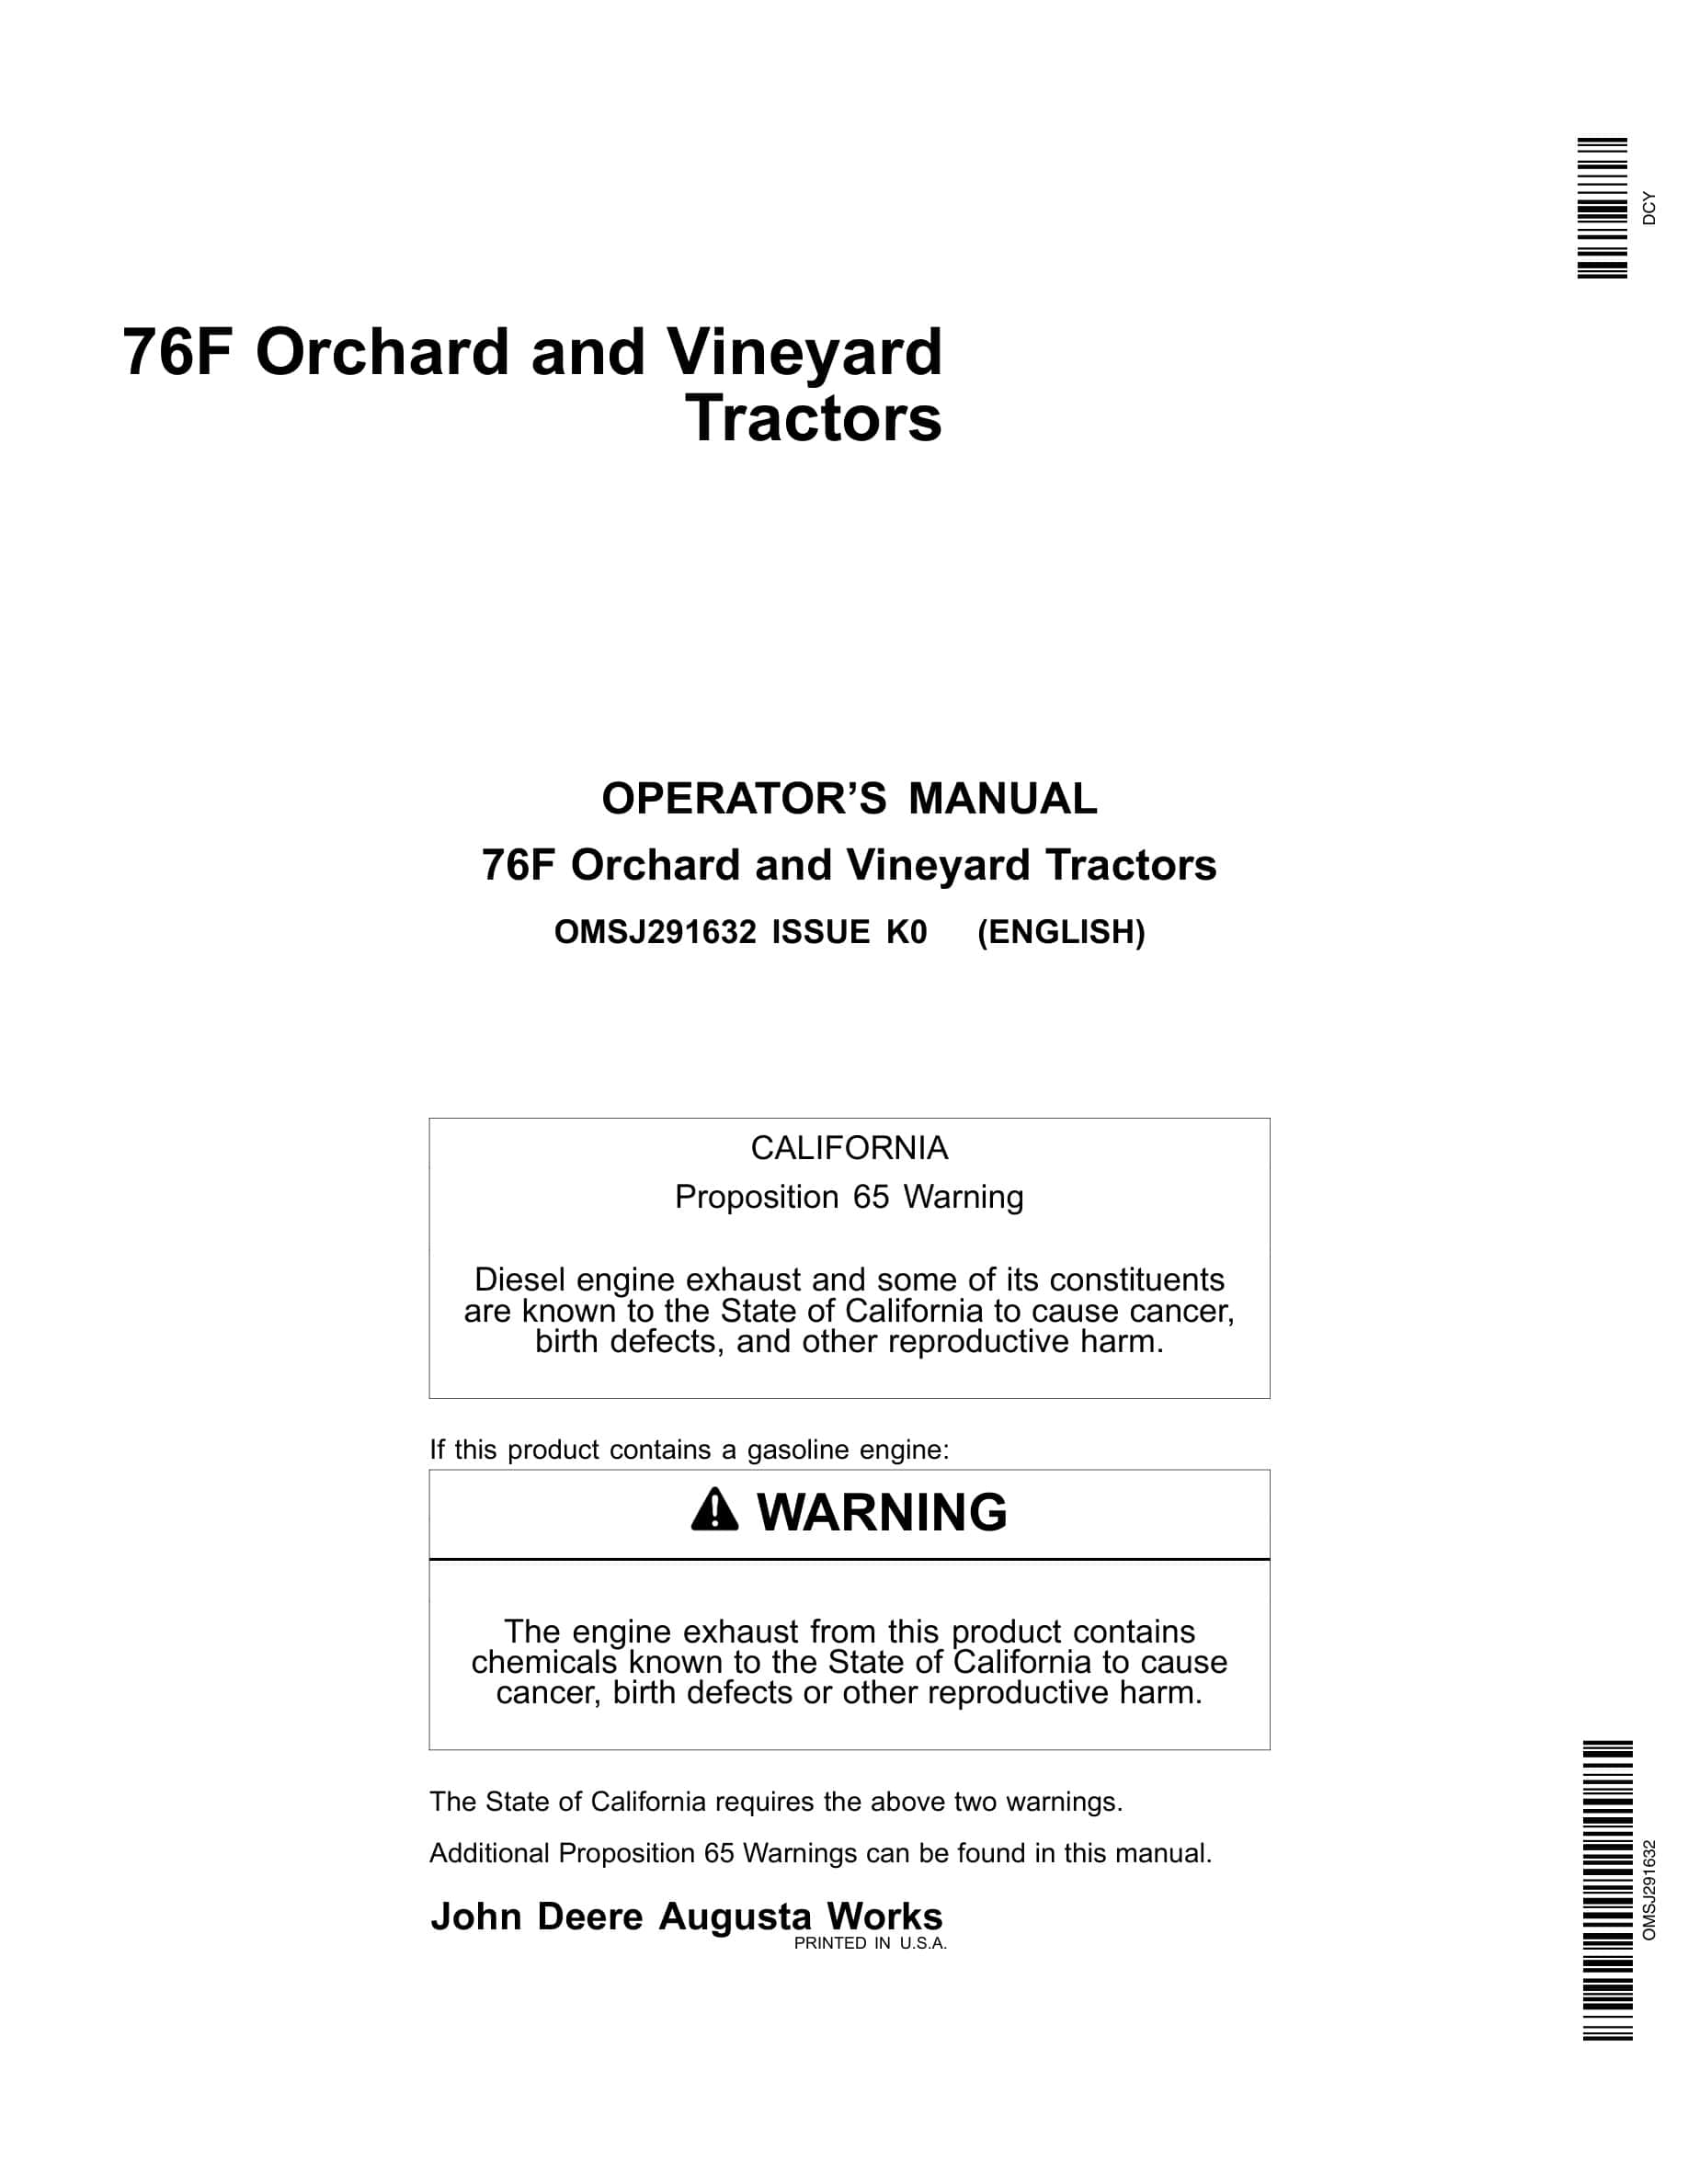 John Deere 76f Orchard And Vineyard Tractors Operator Manuals OMSJ291632-1